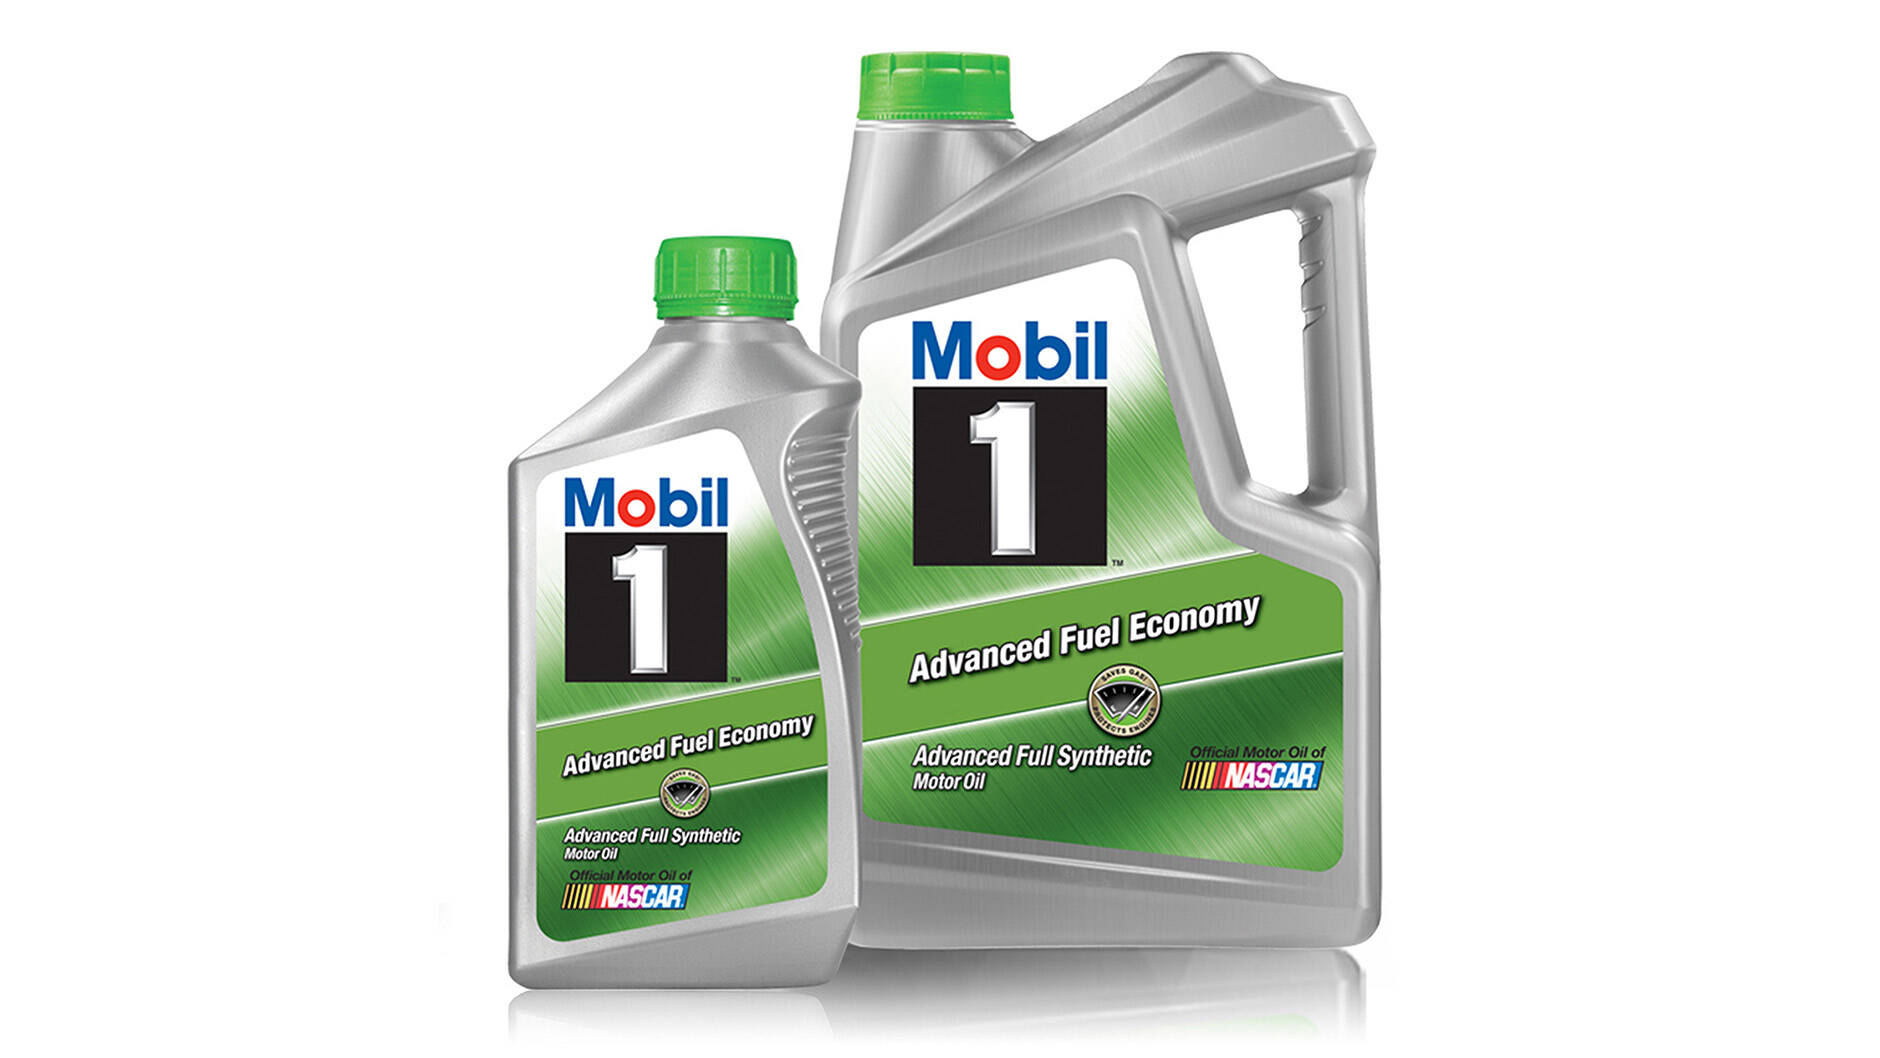 Mobil 1 Advanced Fuel Economy motor oils